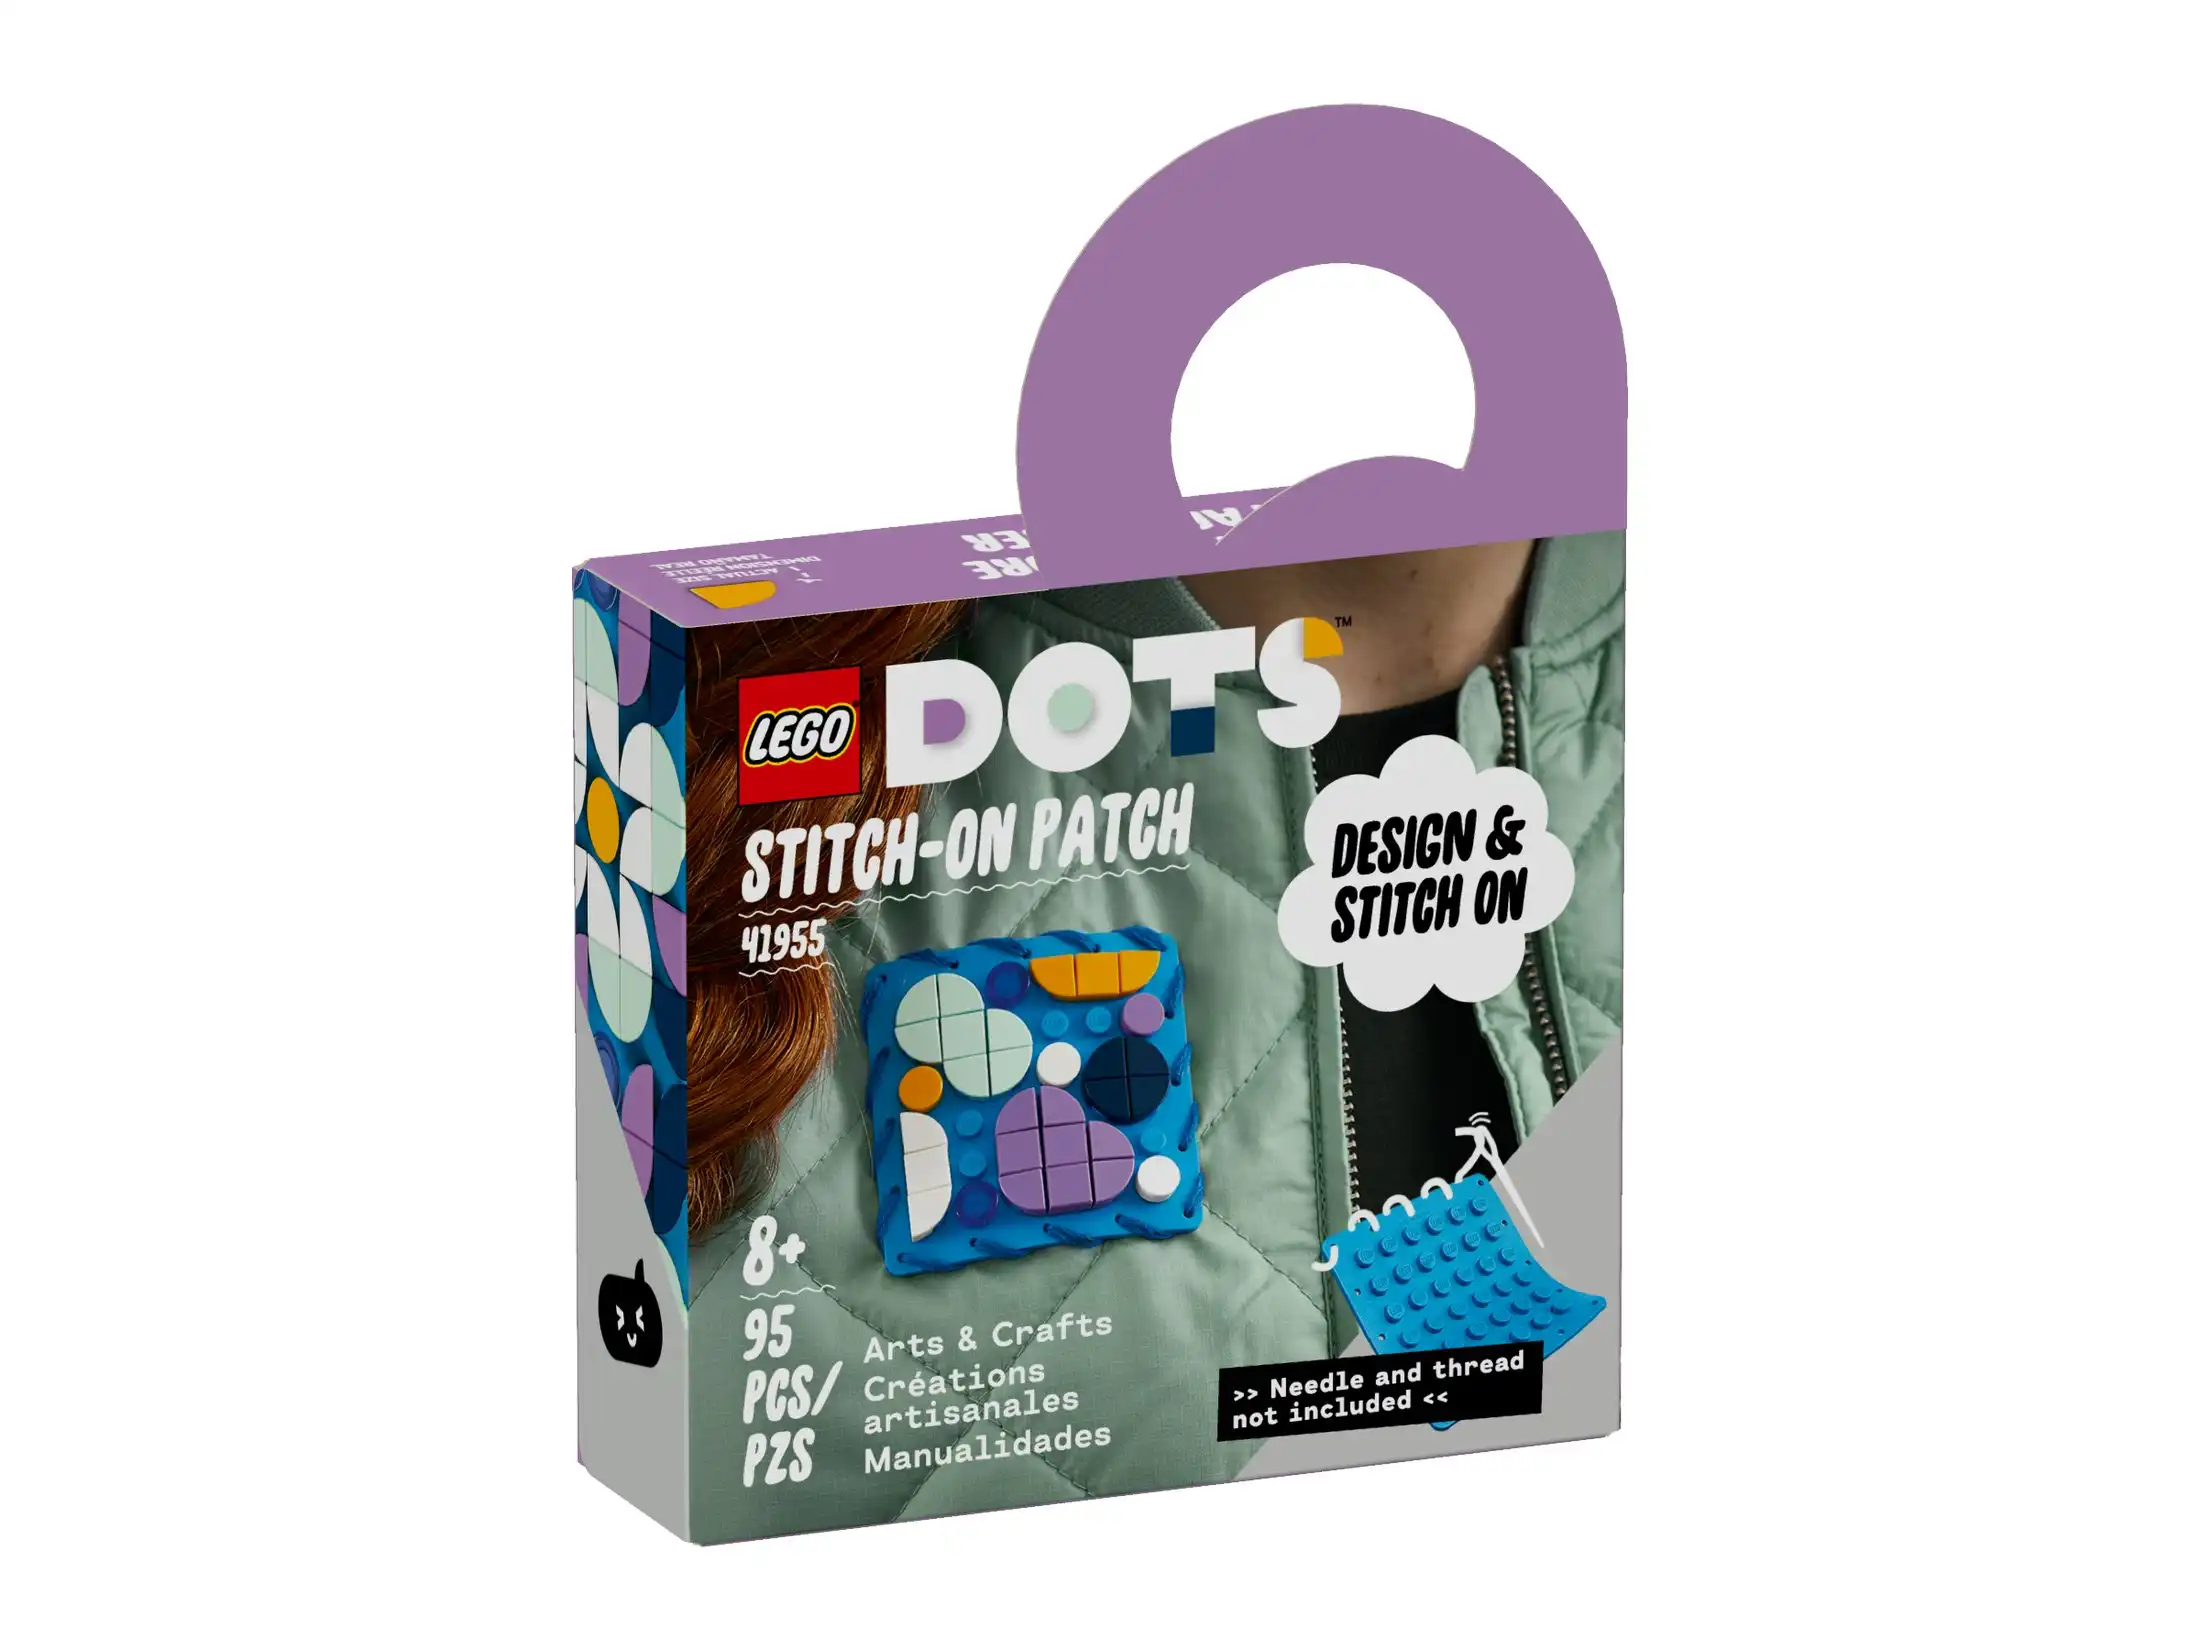 LEGO 41955 Stitch-on Patch - DOTS